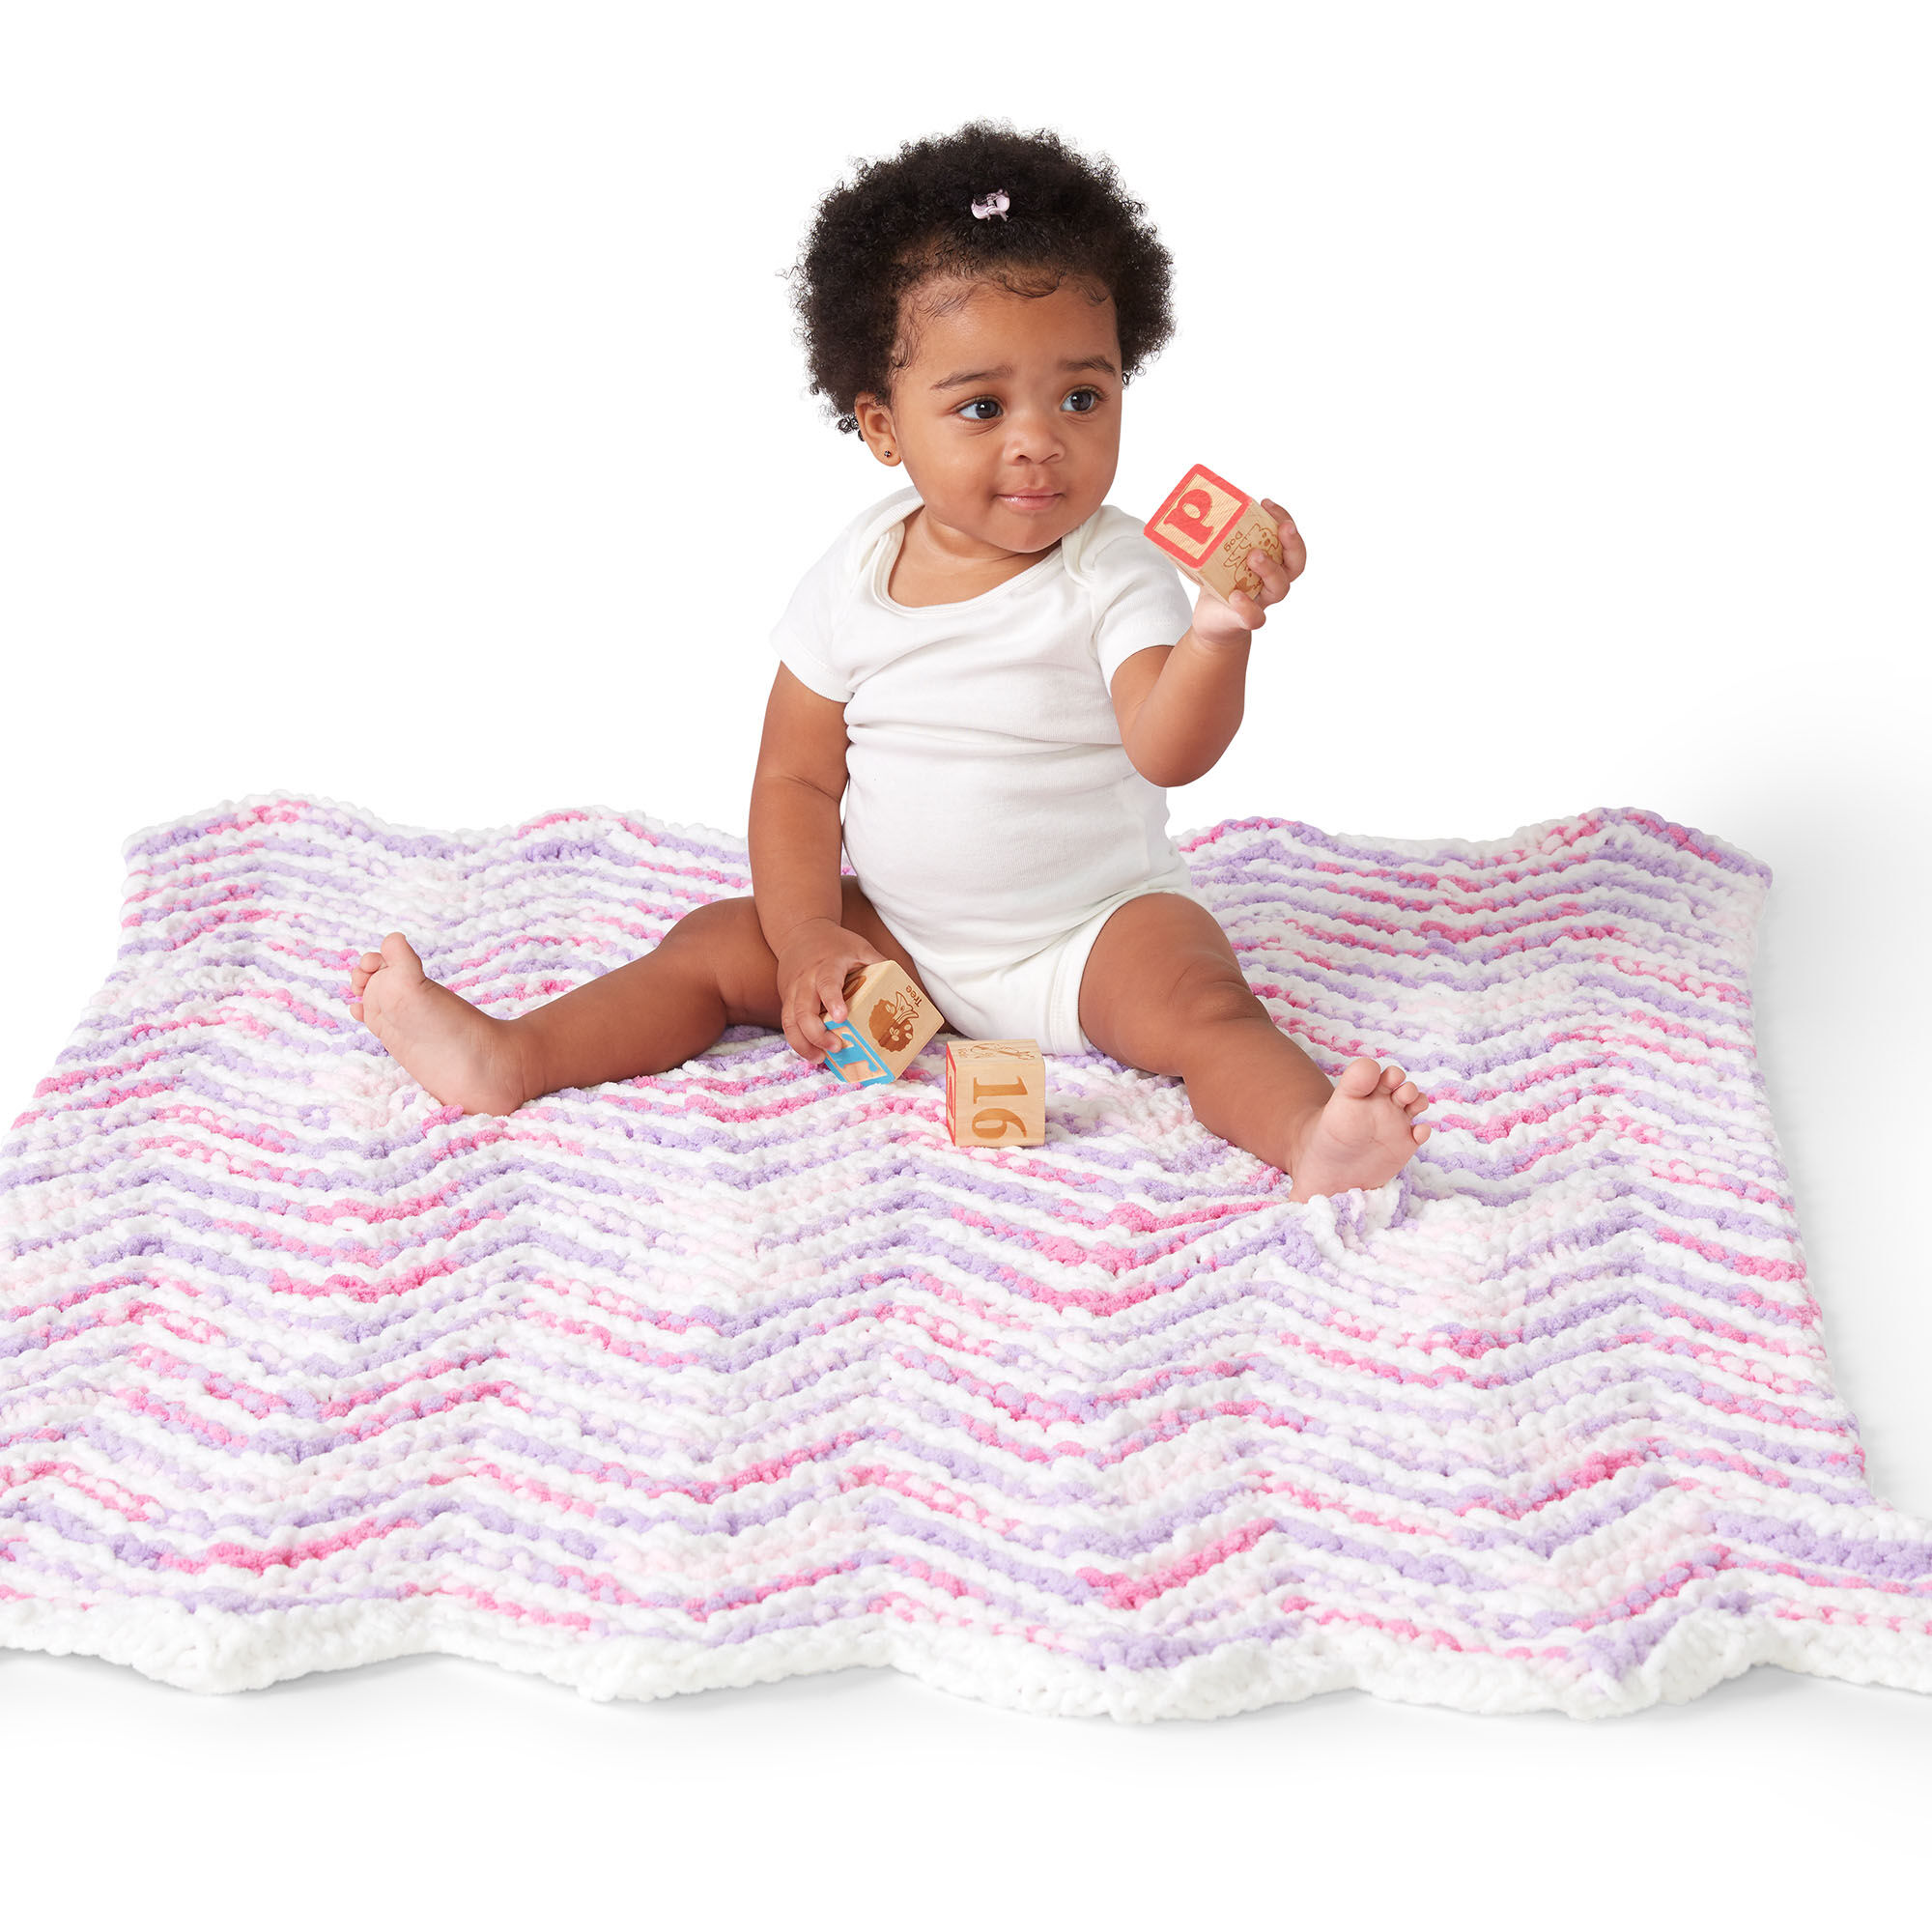 Knitting Patterns Galore - Mini Stripes Baby Blanket